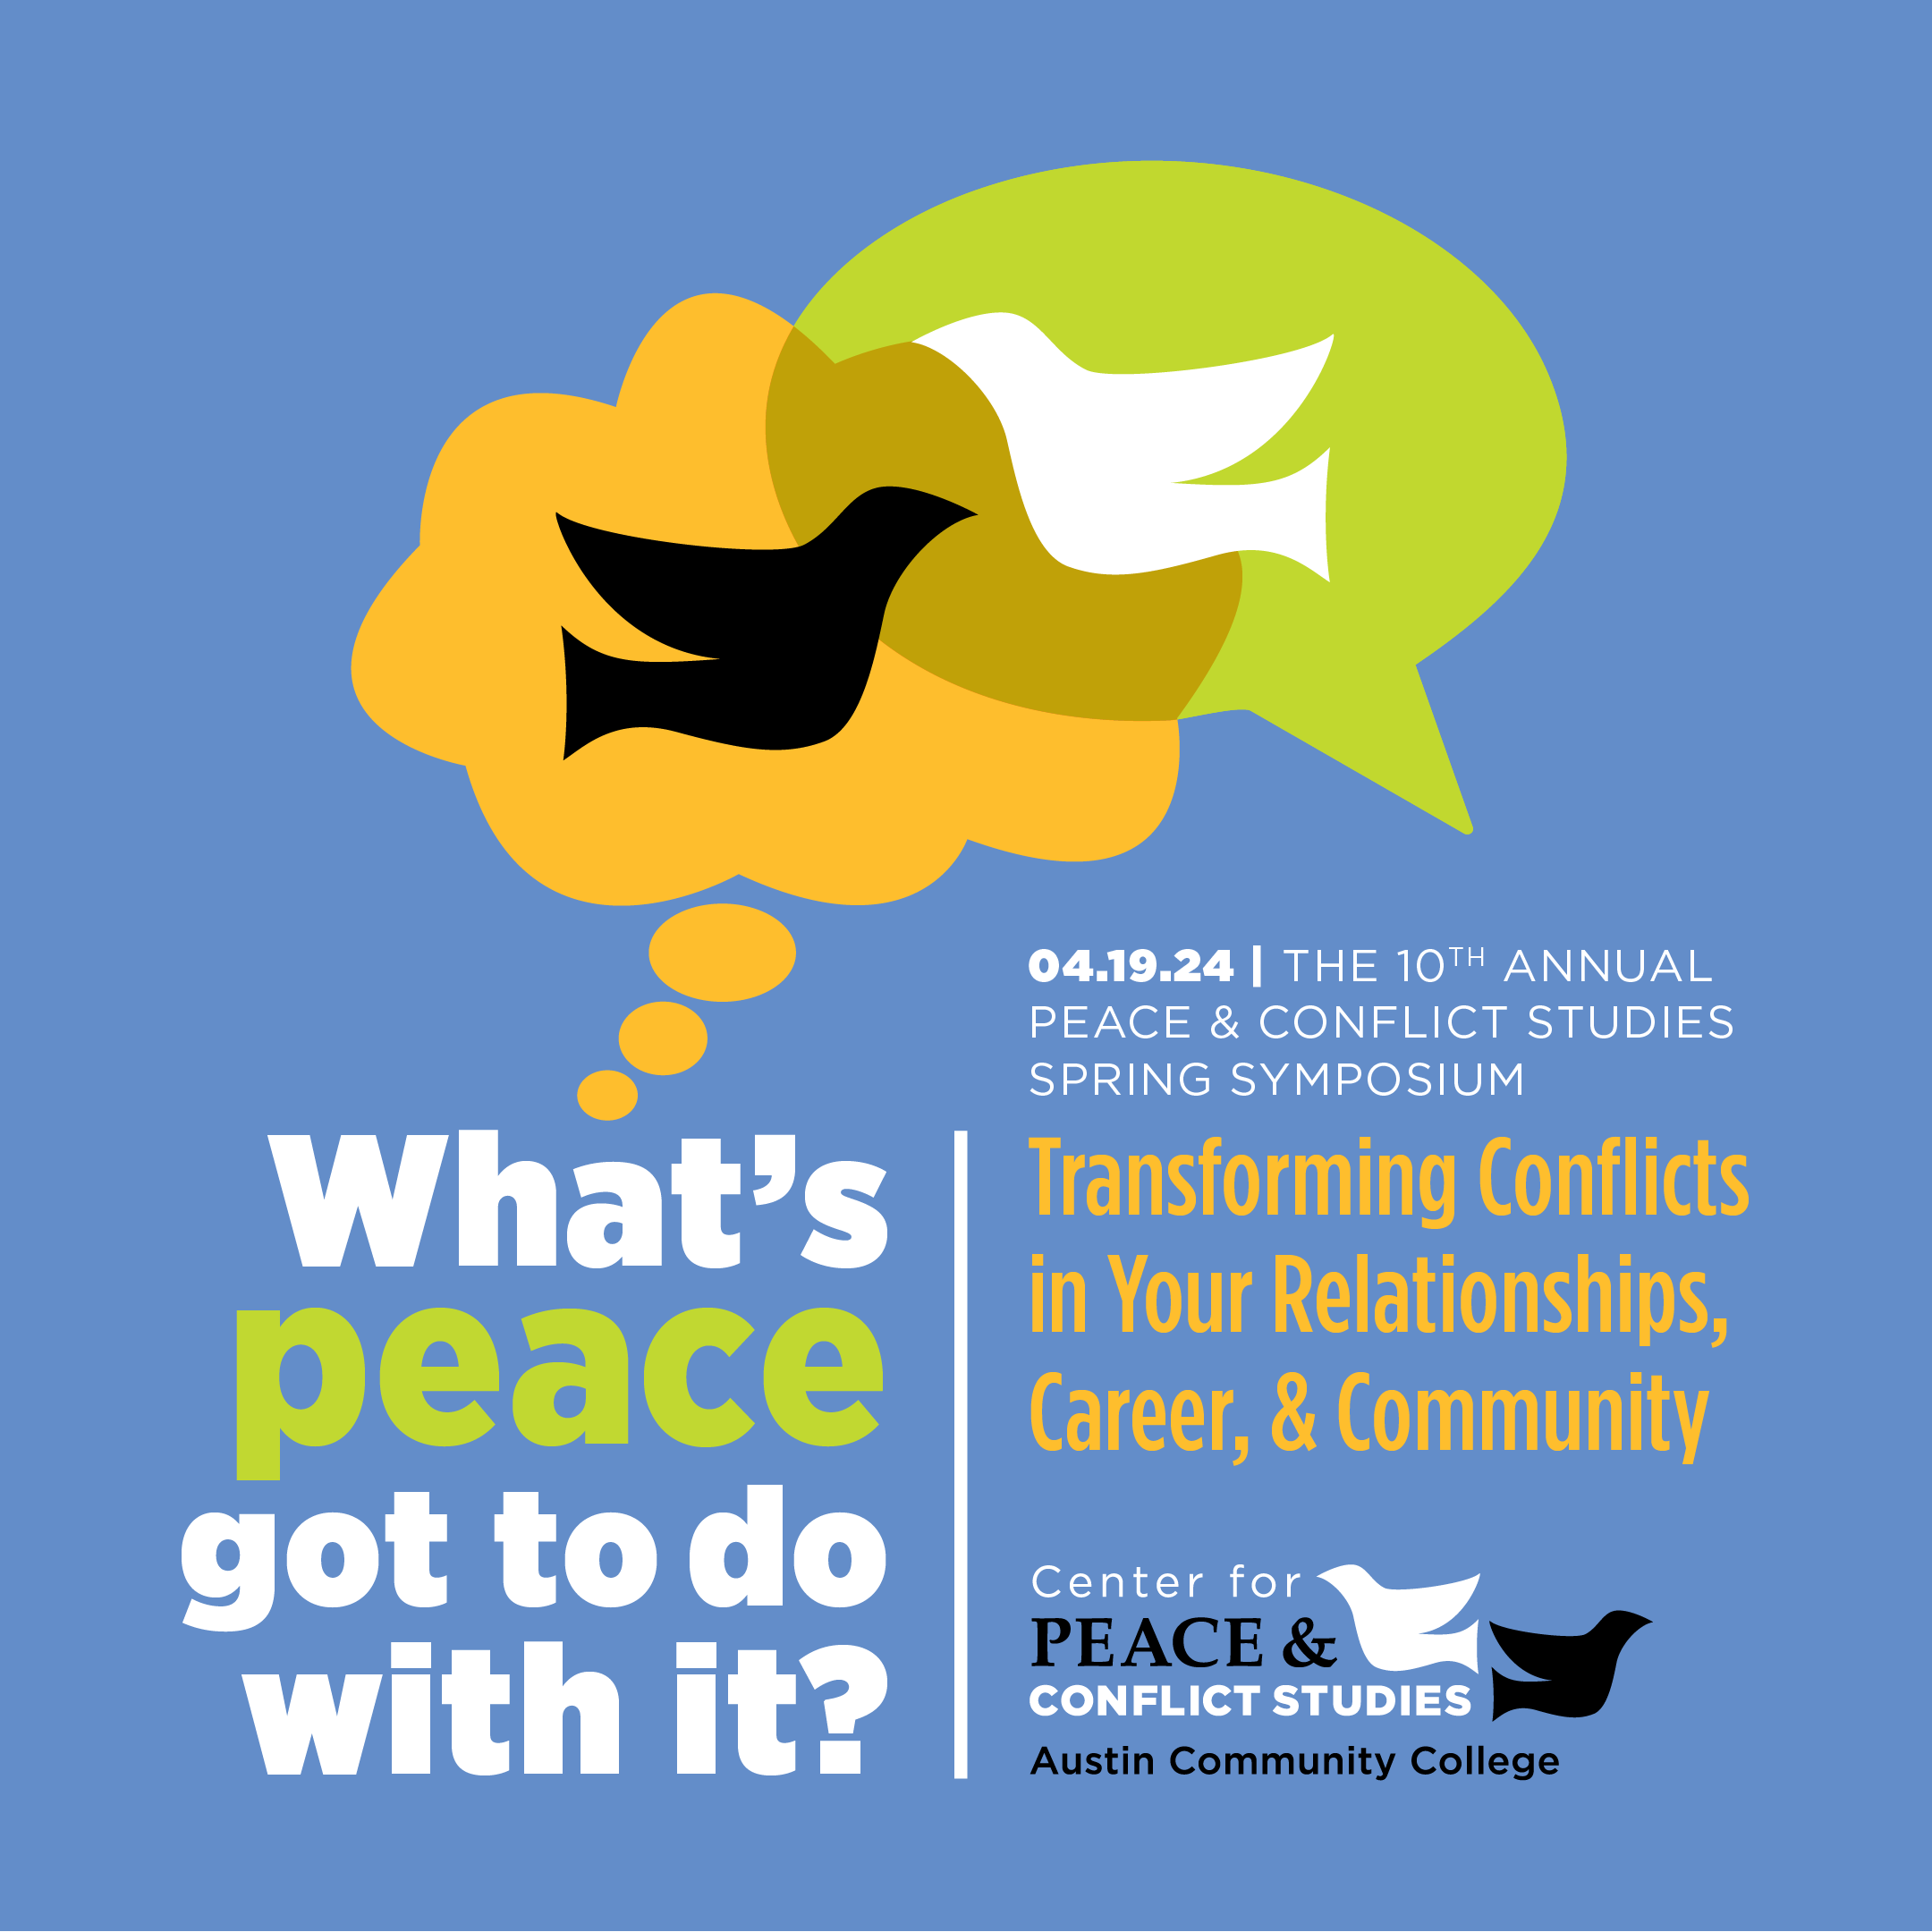 April 19 The 10th Annual Peace & Conflict Studies Spring Symposium